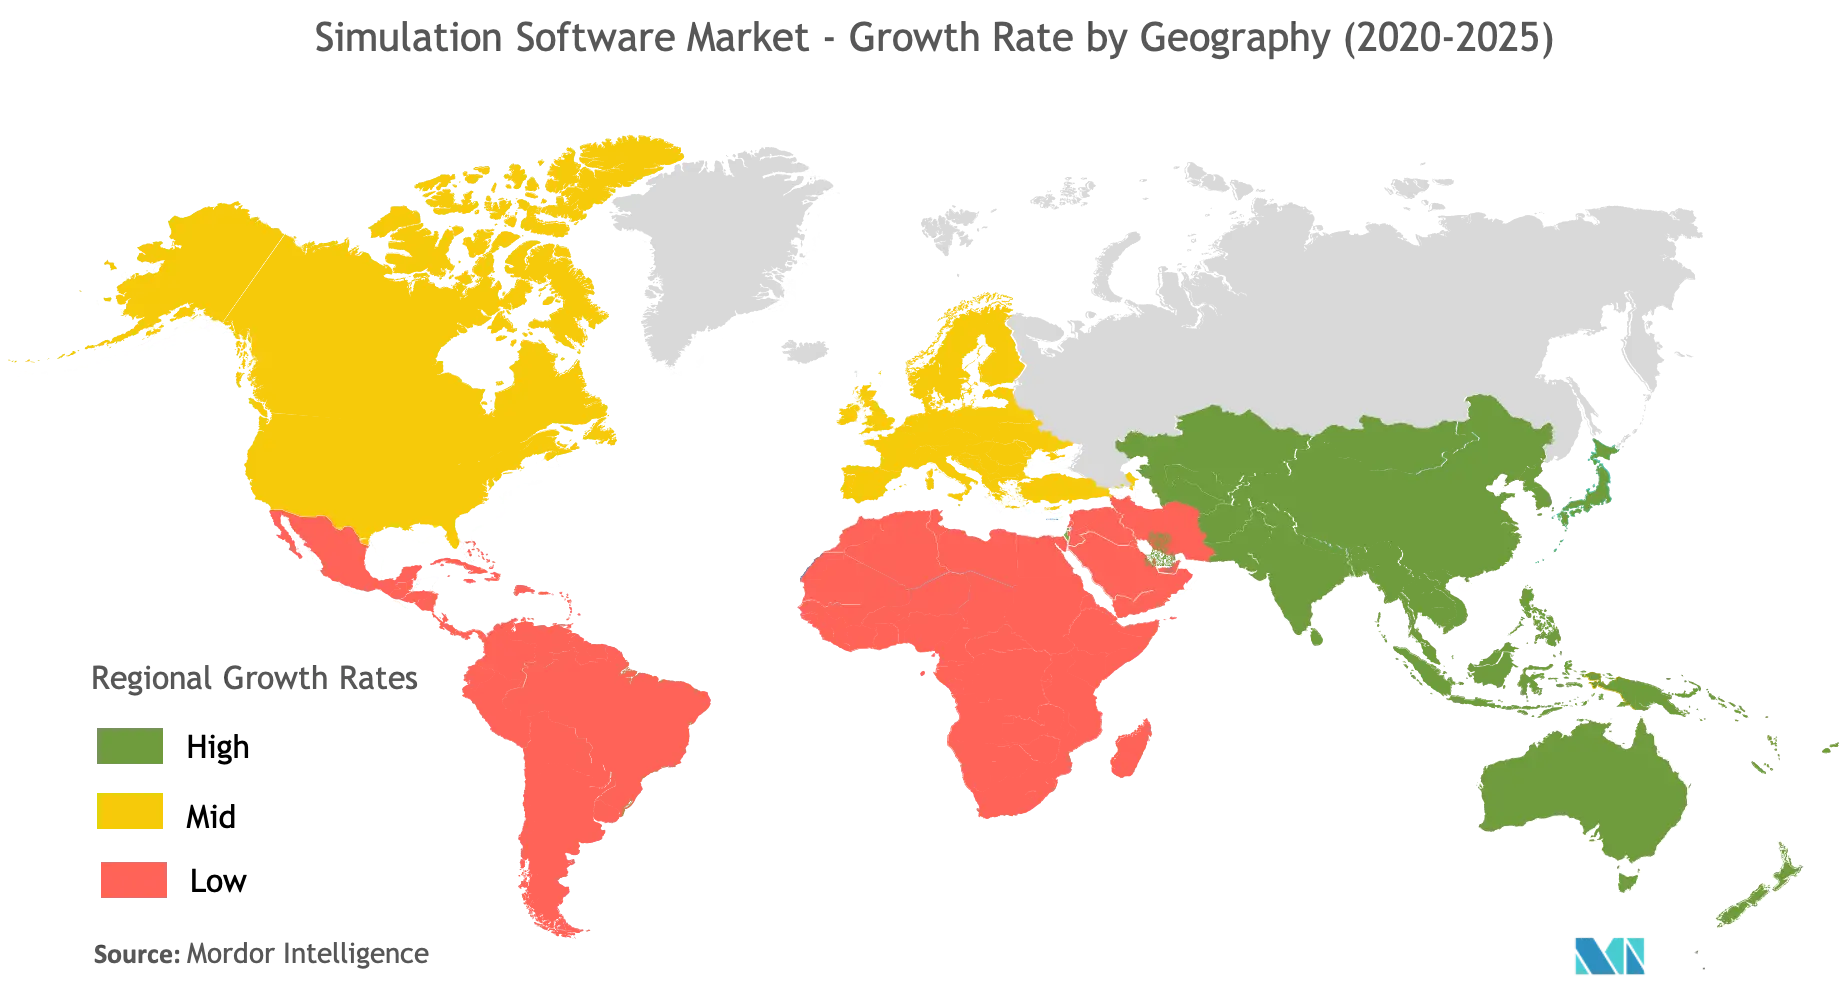 Simulation Software Market Growth by Region